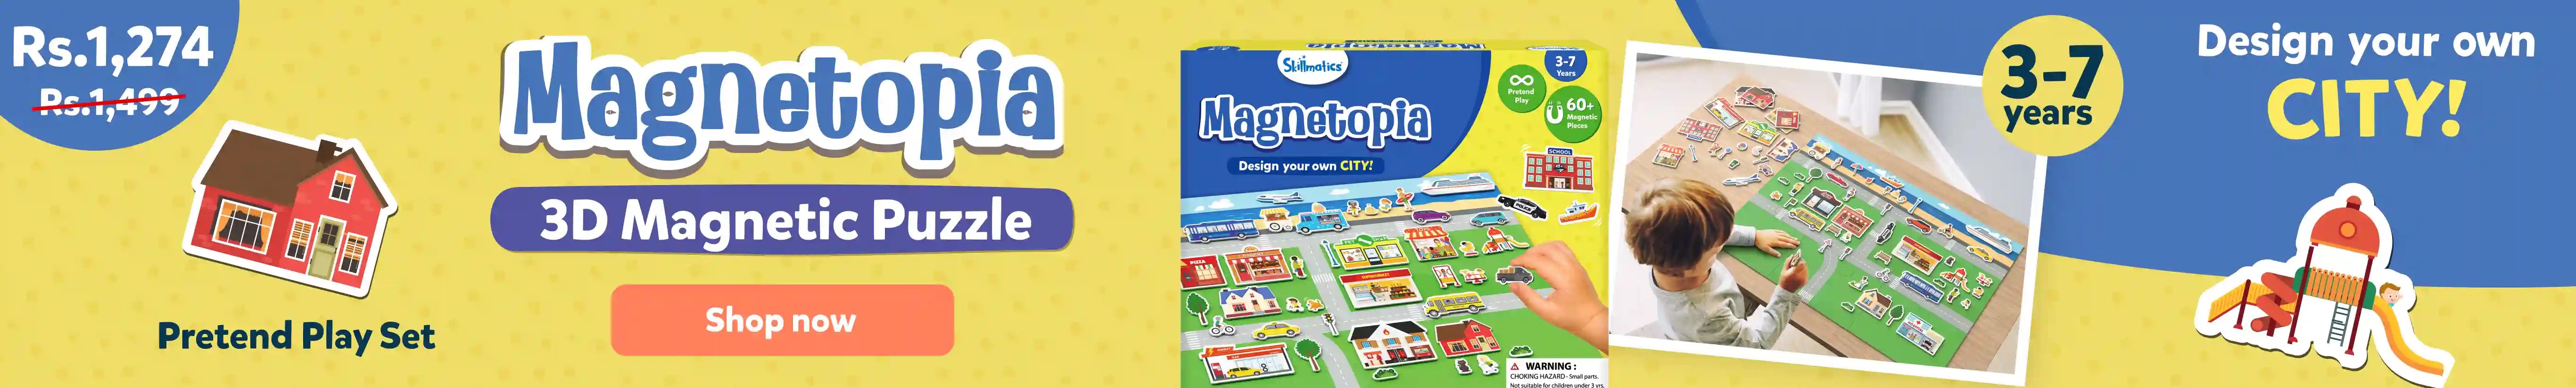 Magnetopia City